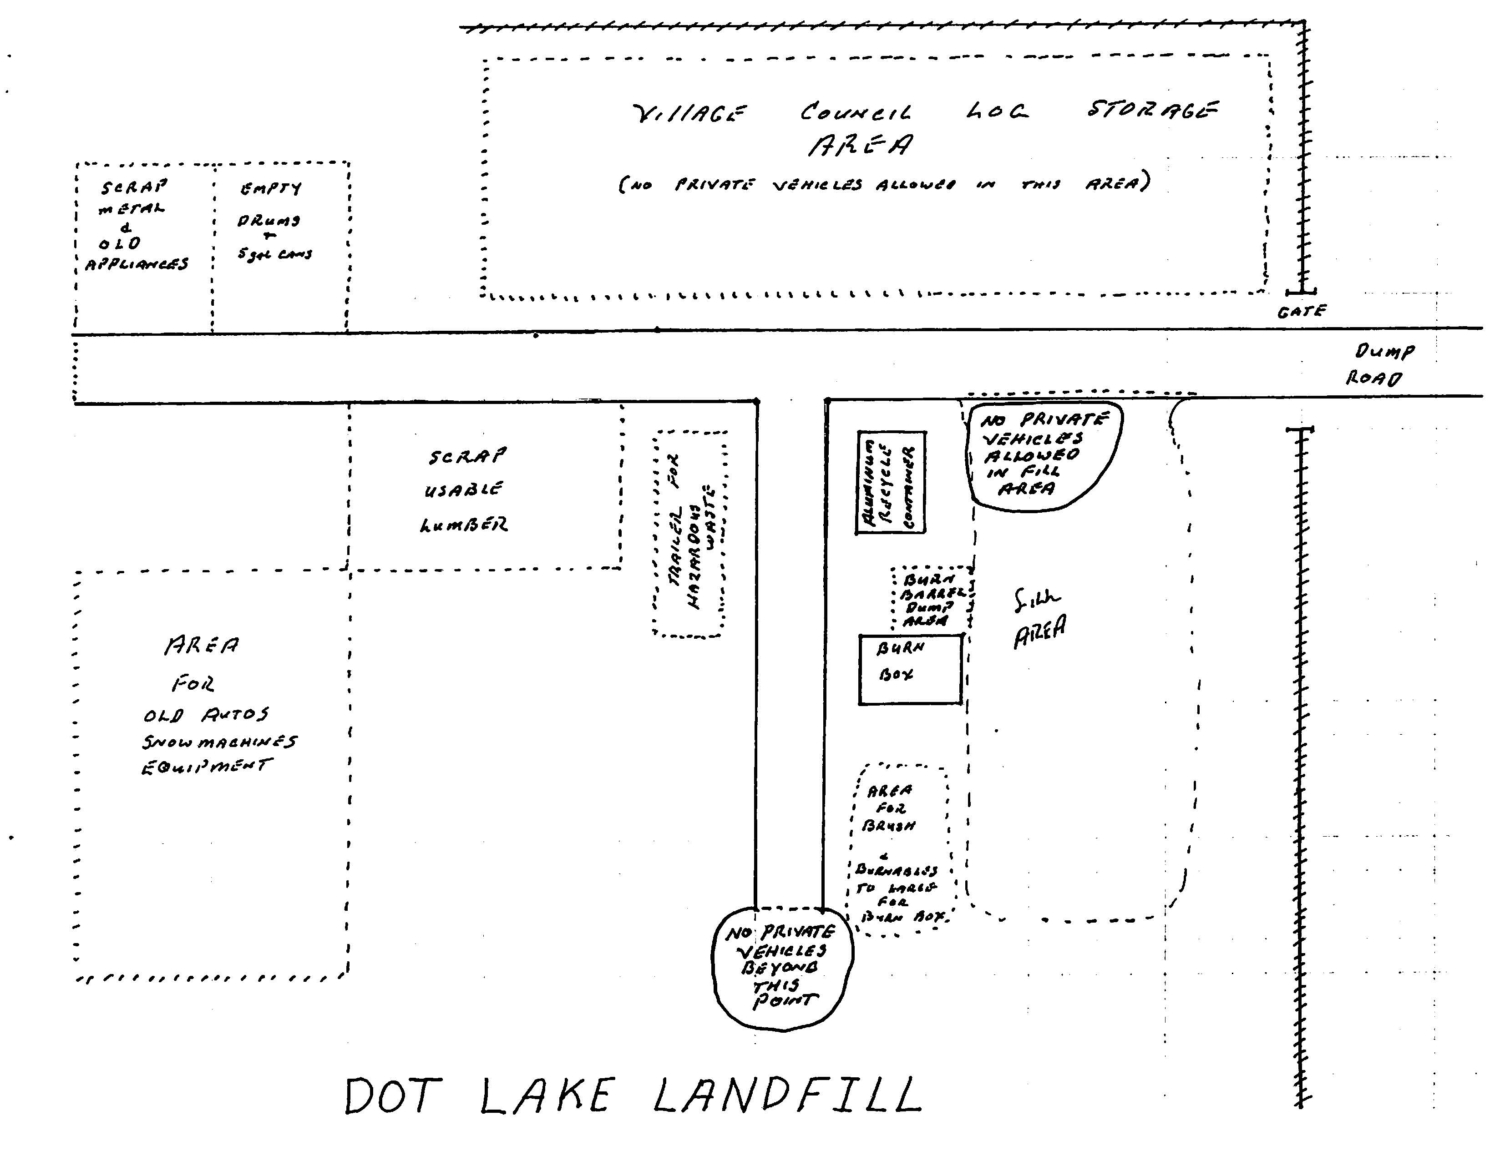 A map of the Dot Lake Village landfill.